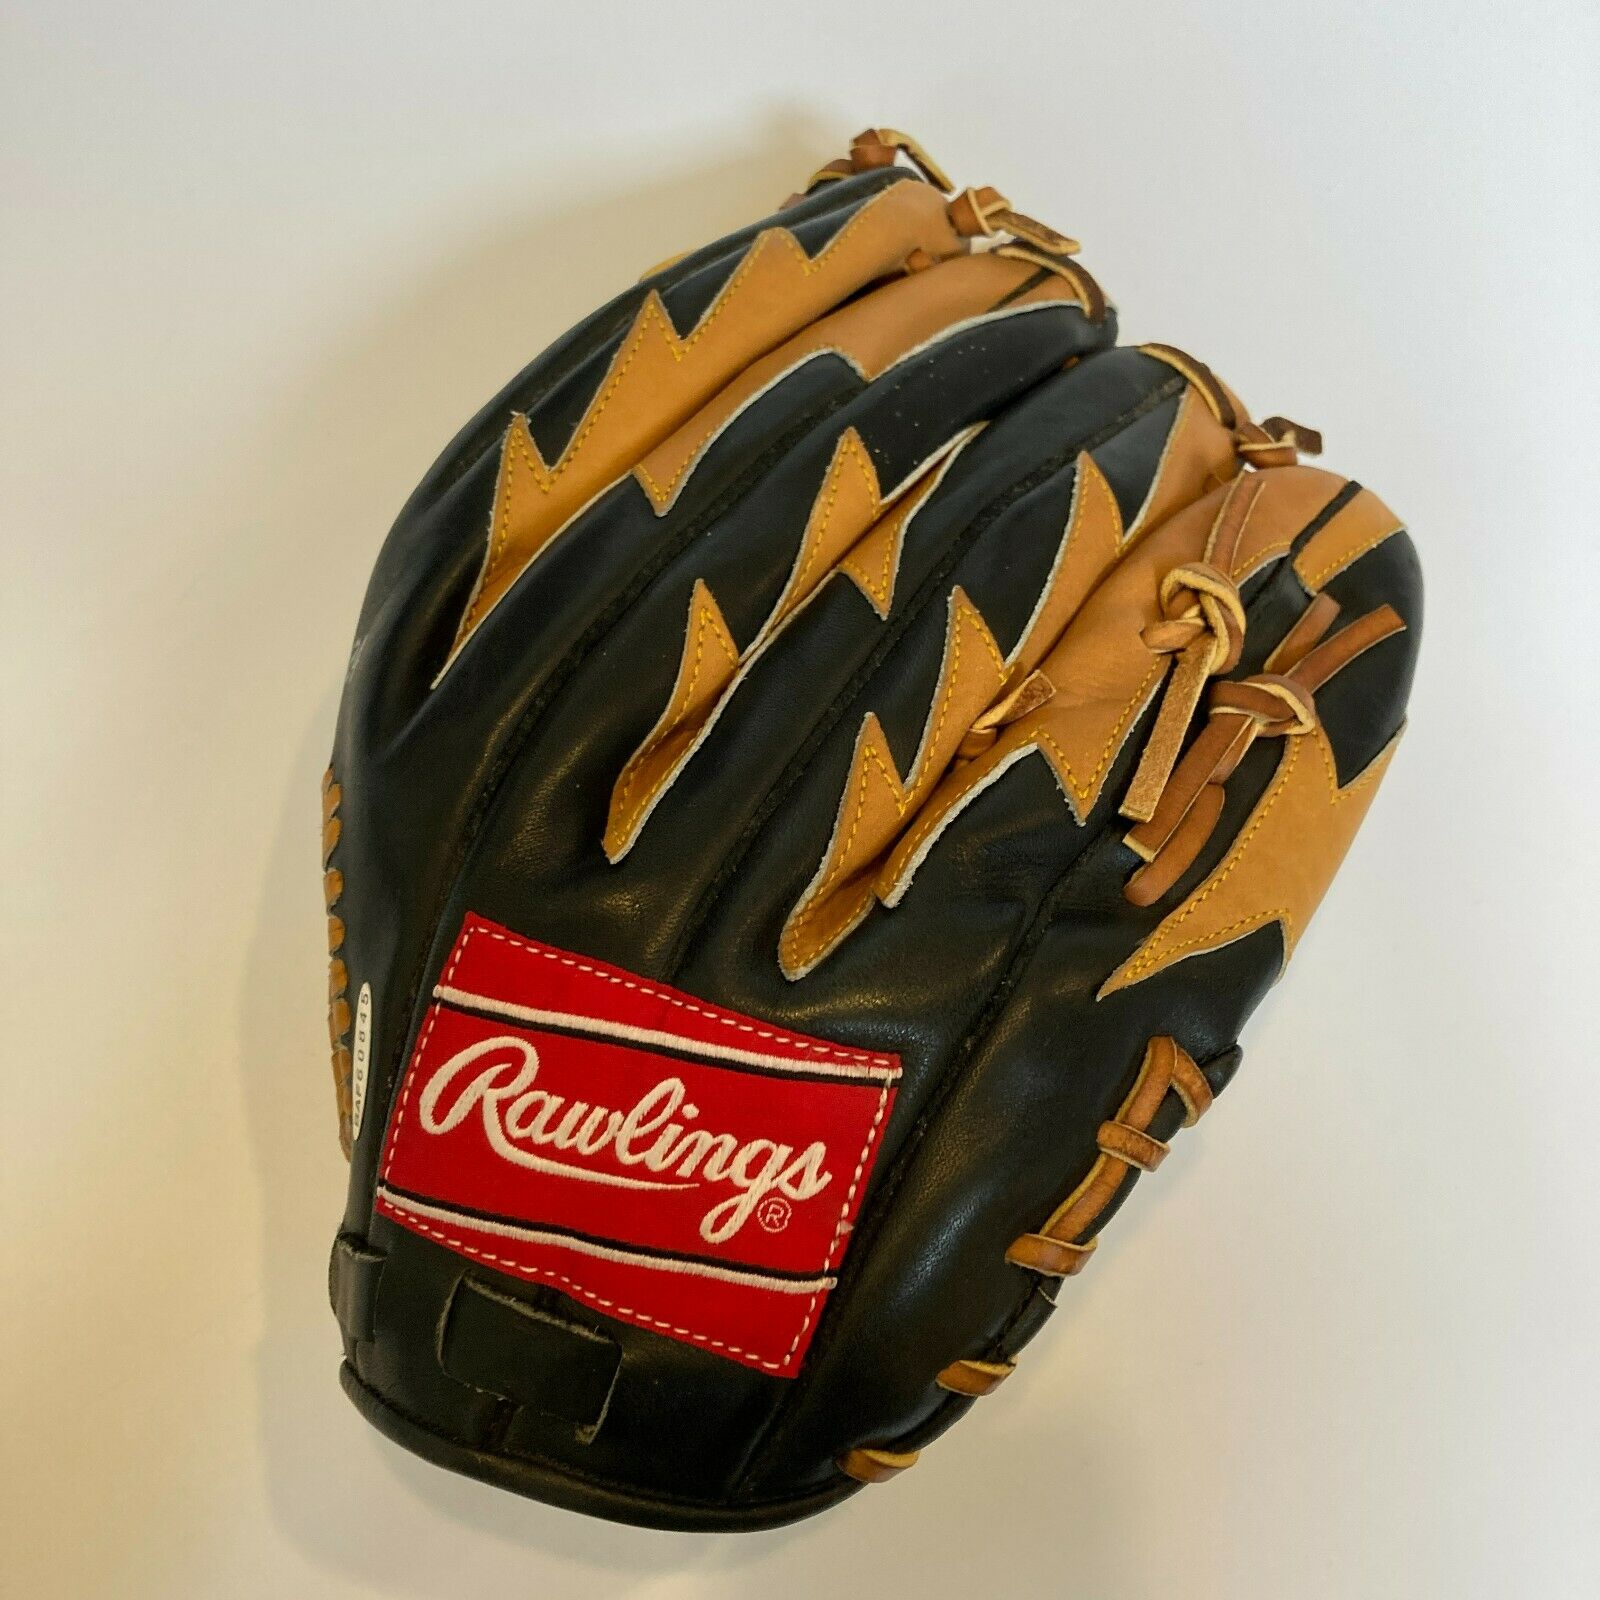 Baseball Glove worn by Ken Griffey Jr.